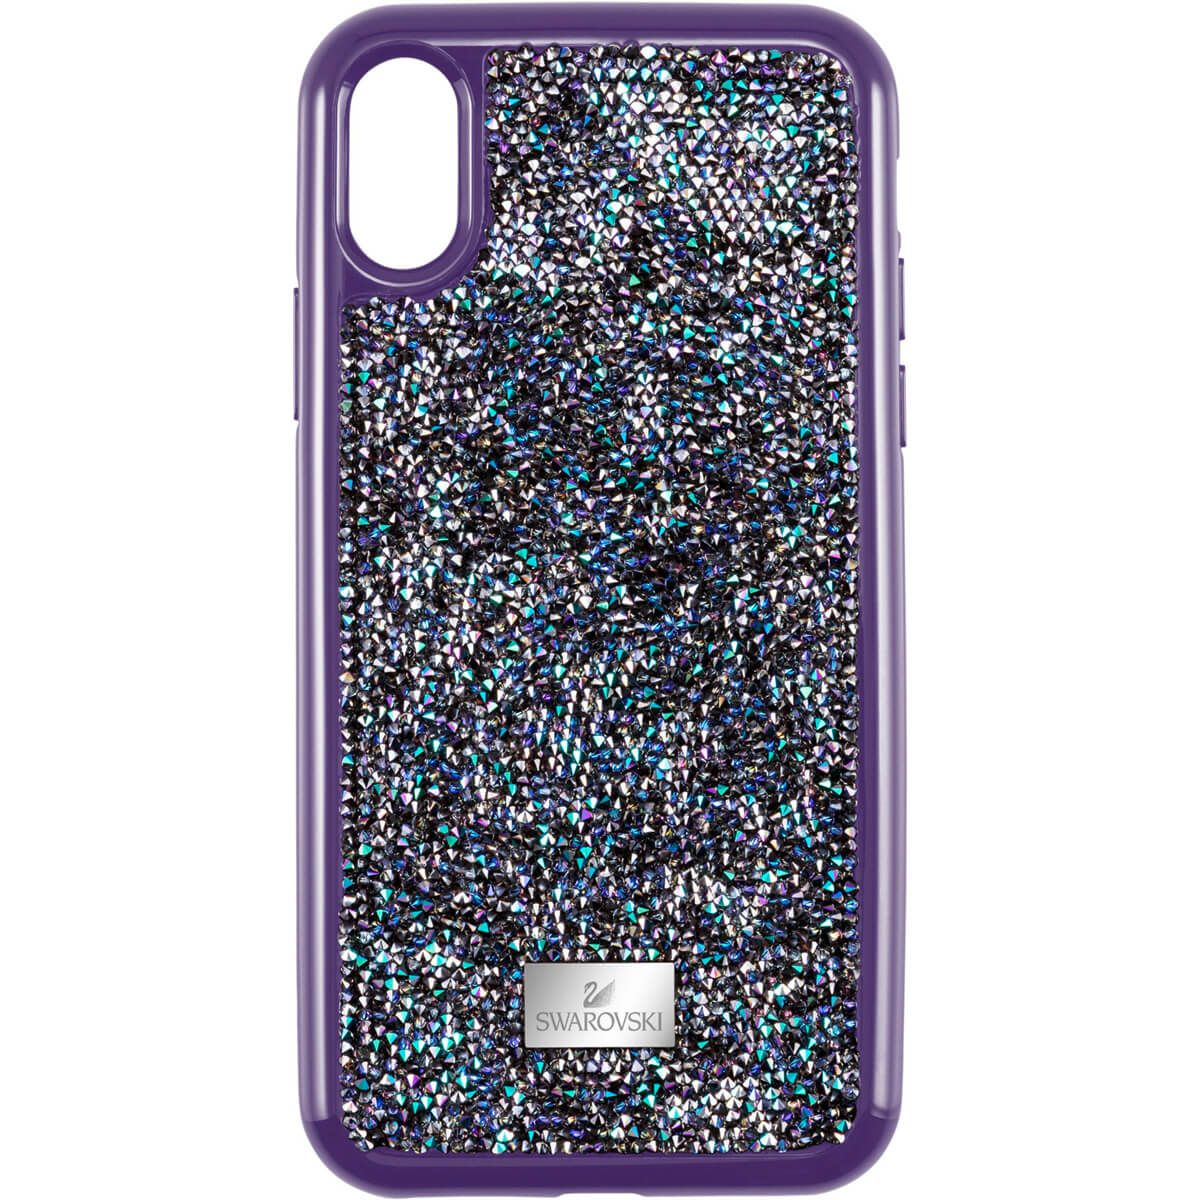 Buy Swarovski Glam Rock Smartphone Case - iPhone® X in Purple Online